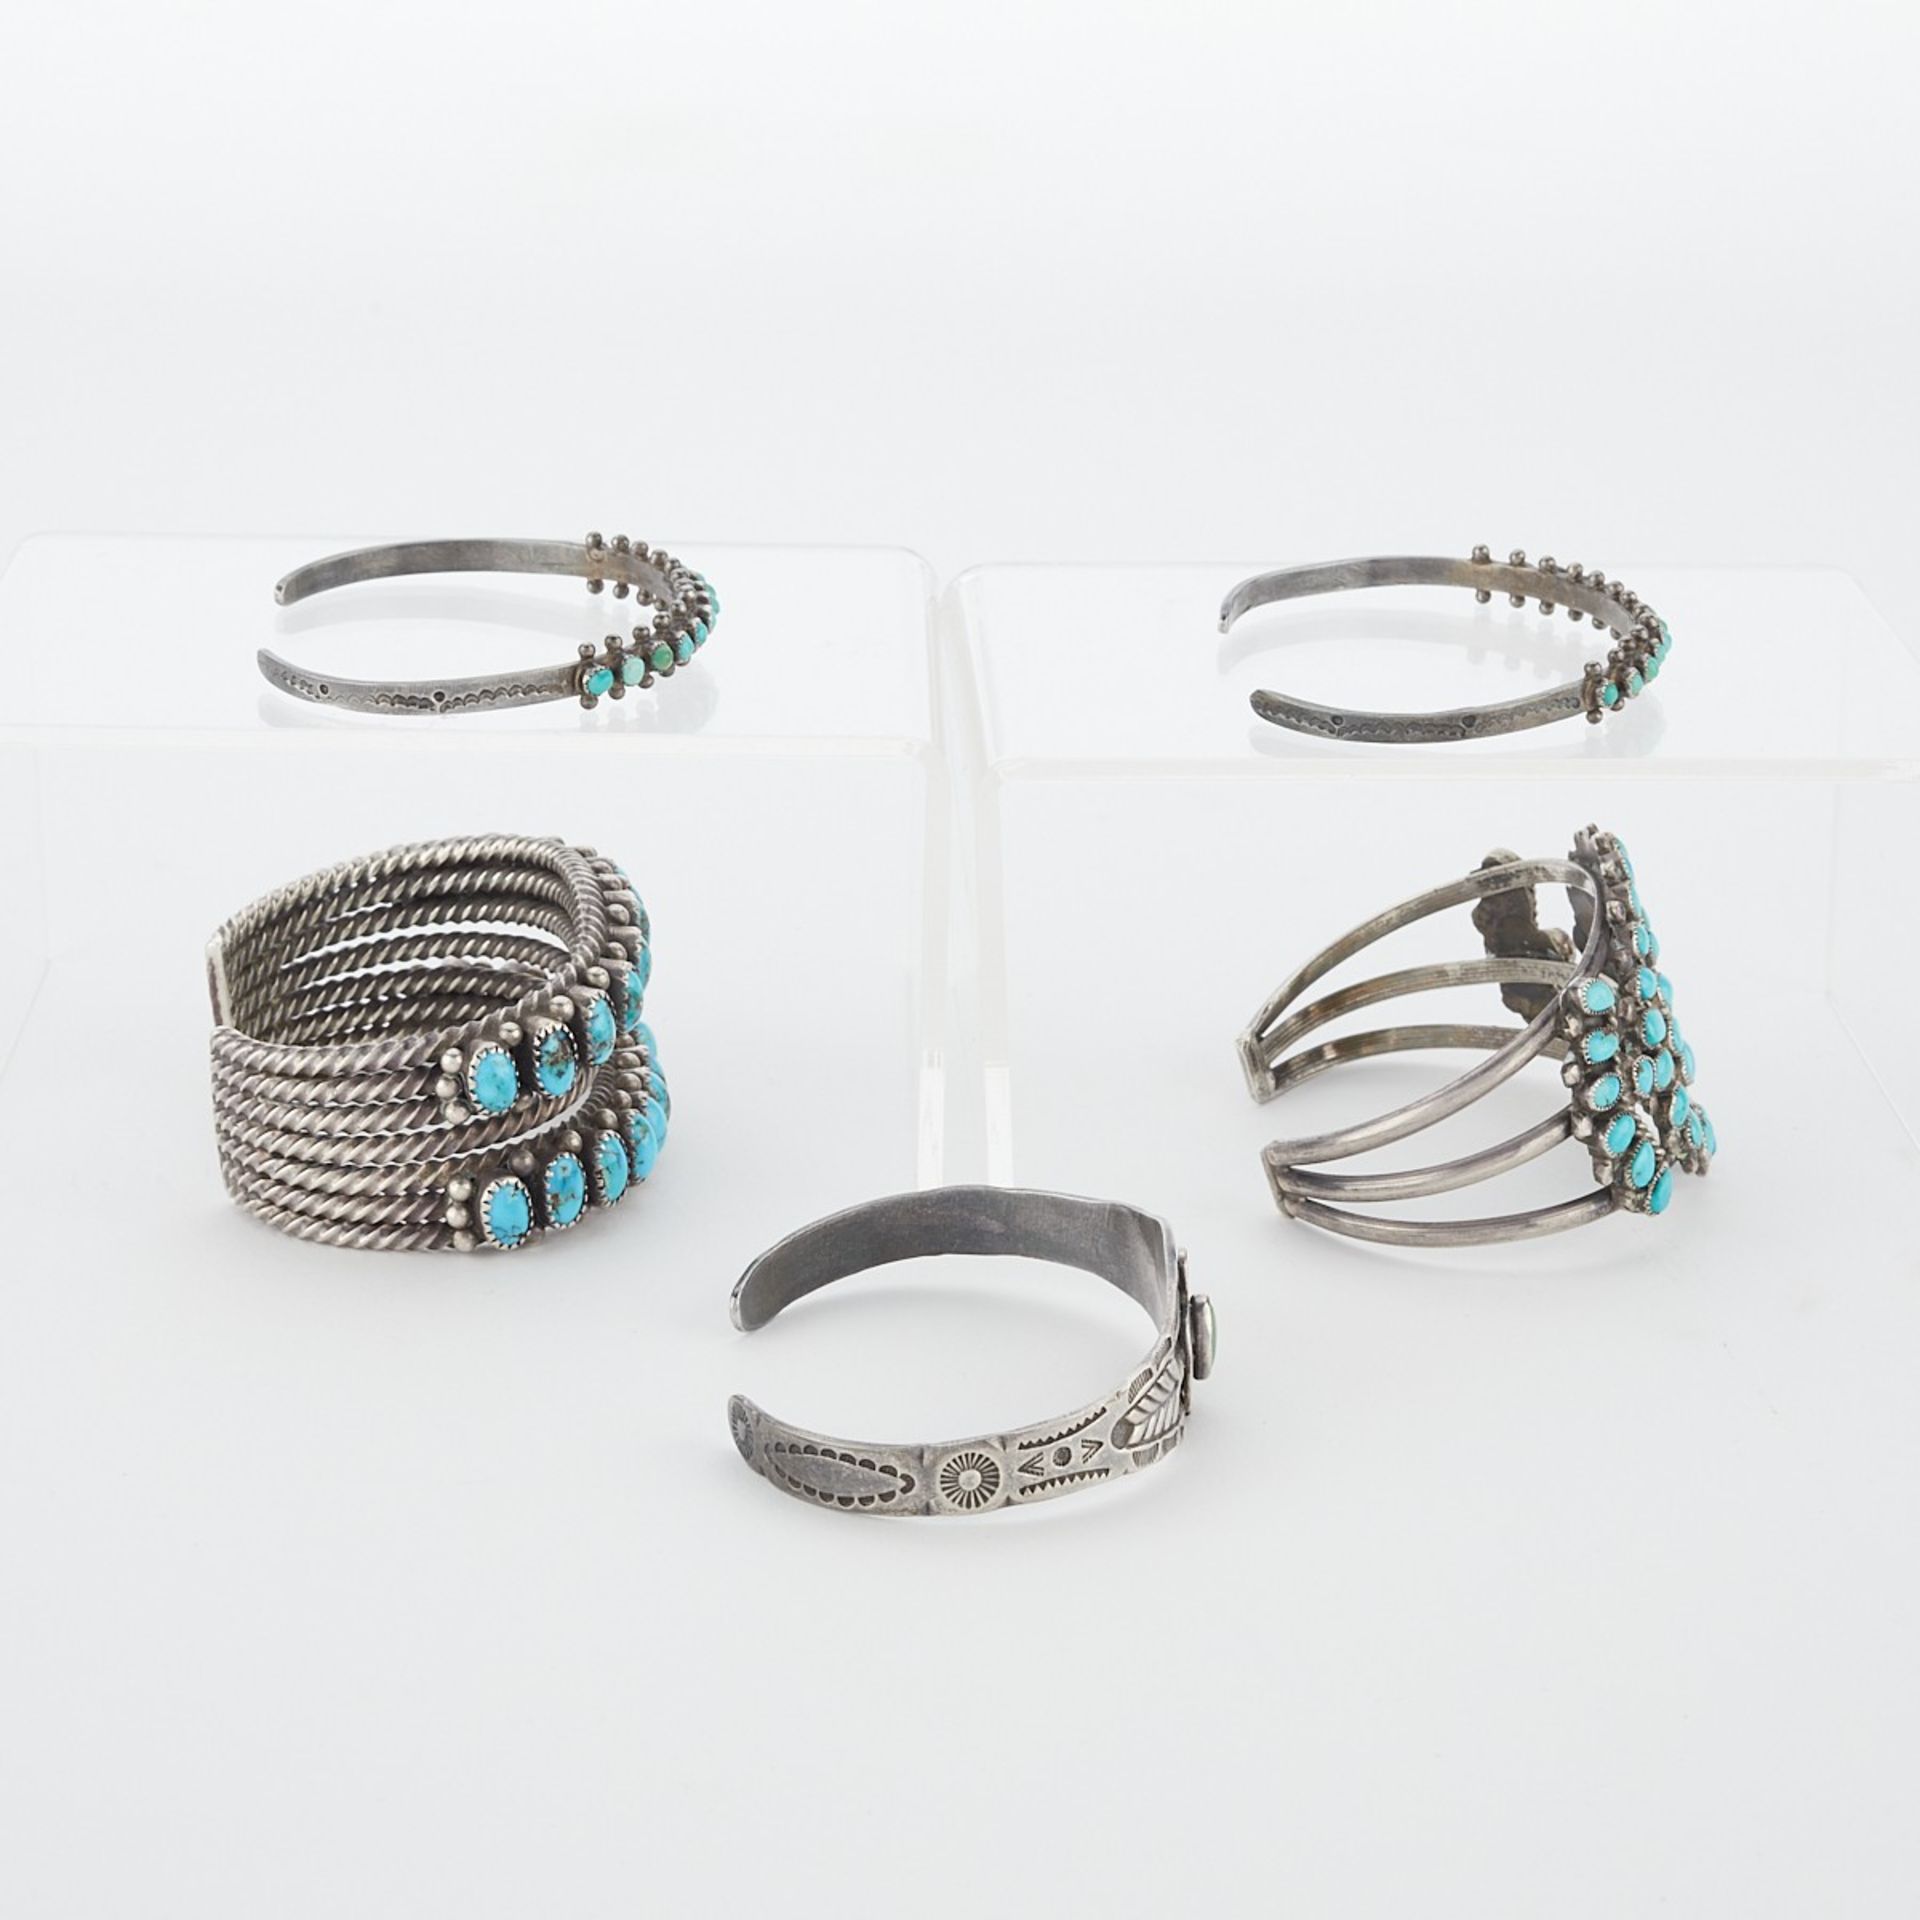 Group of 5 Southwest Turquoise Bracelet Cuffs - Image 6 of 10